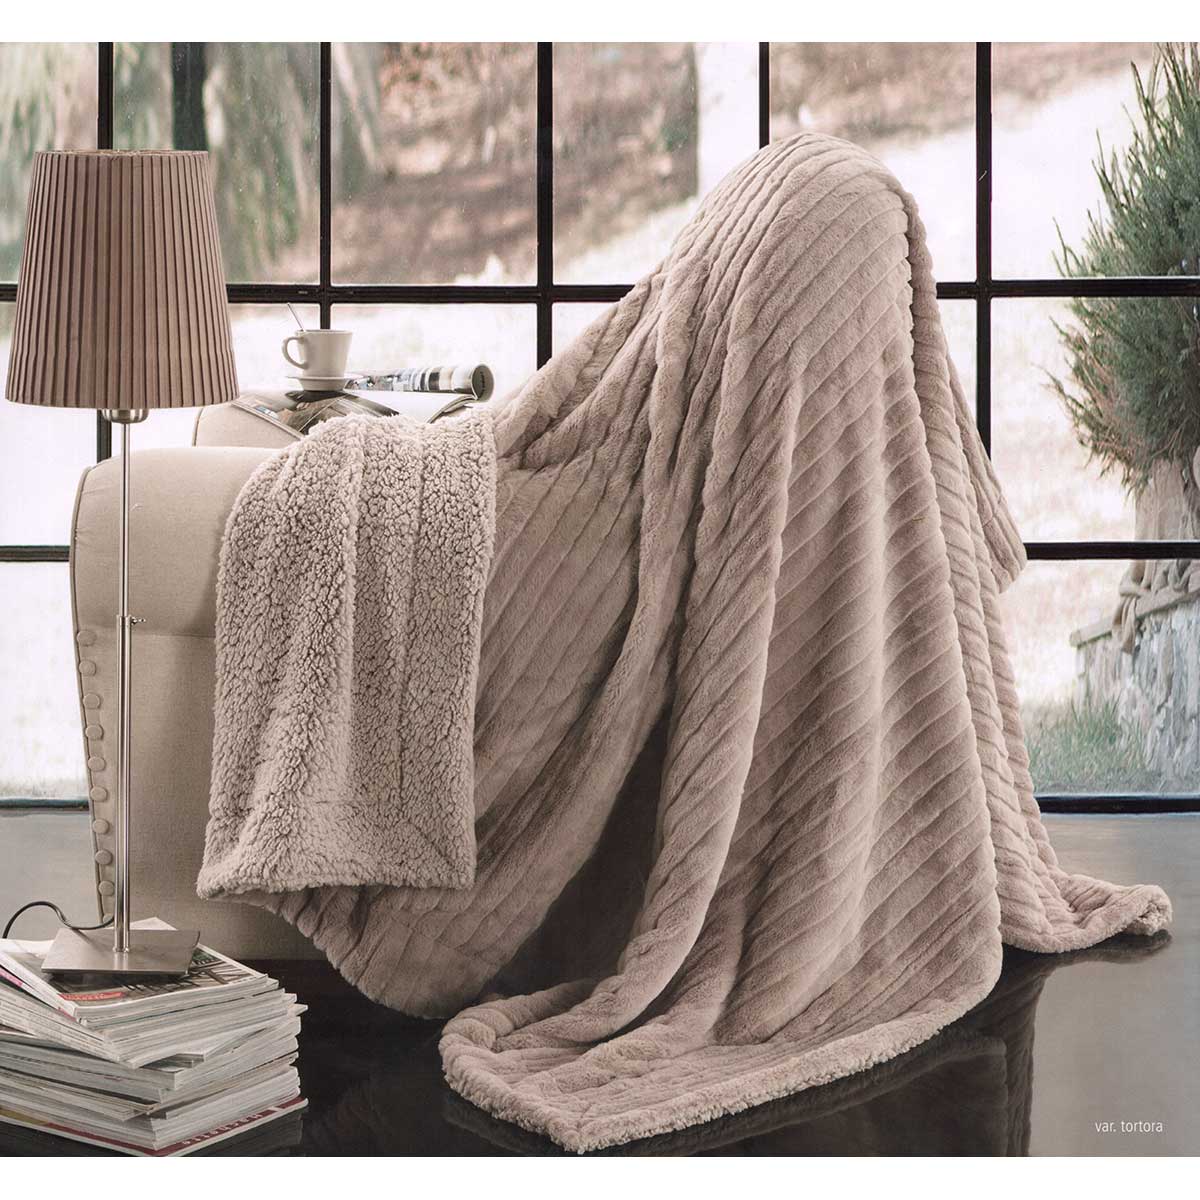 Plaid e coperta divano Visone pelliccia ecologica